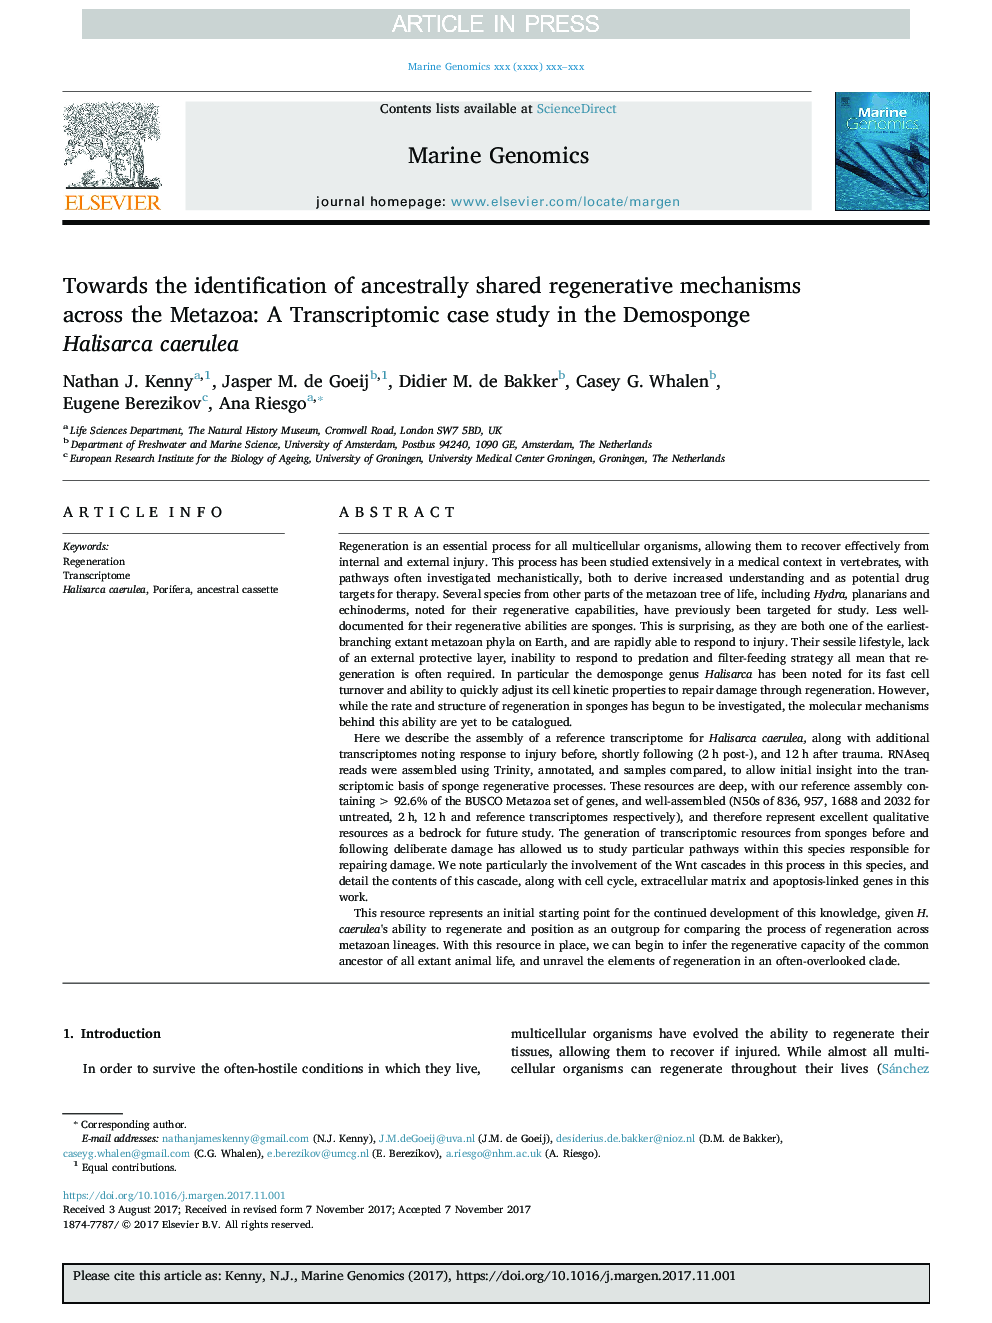 Towards the identification of ancestrally shared regenerative mechanisms across the Metazoa: A Transcriptomic case study in the Demosponge Halisarca caerulea